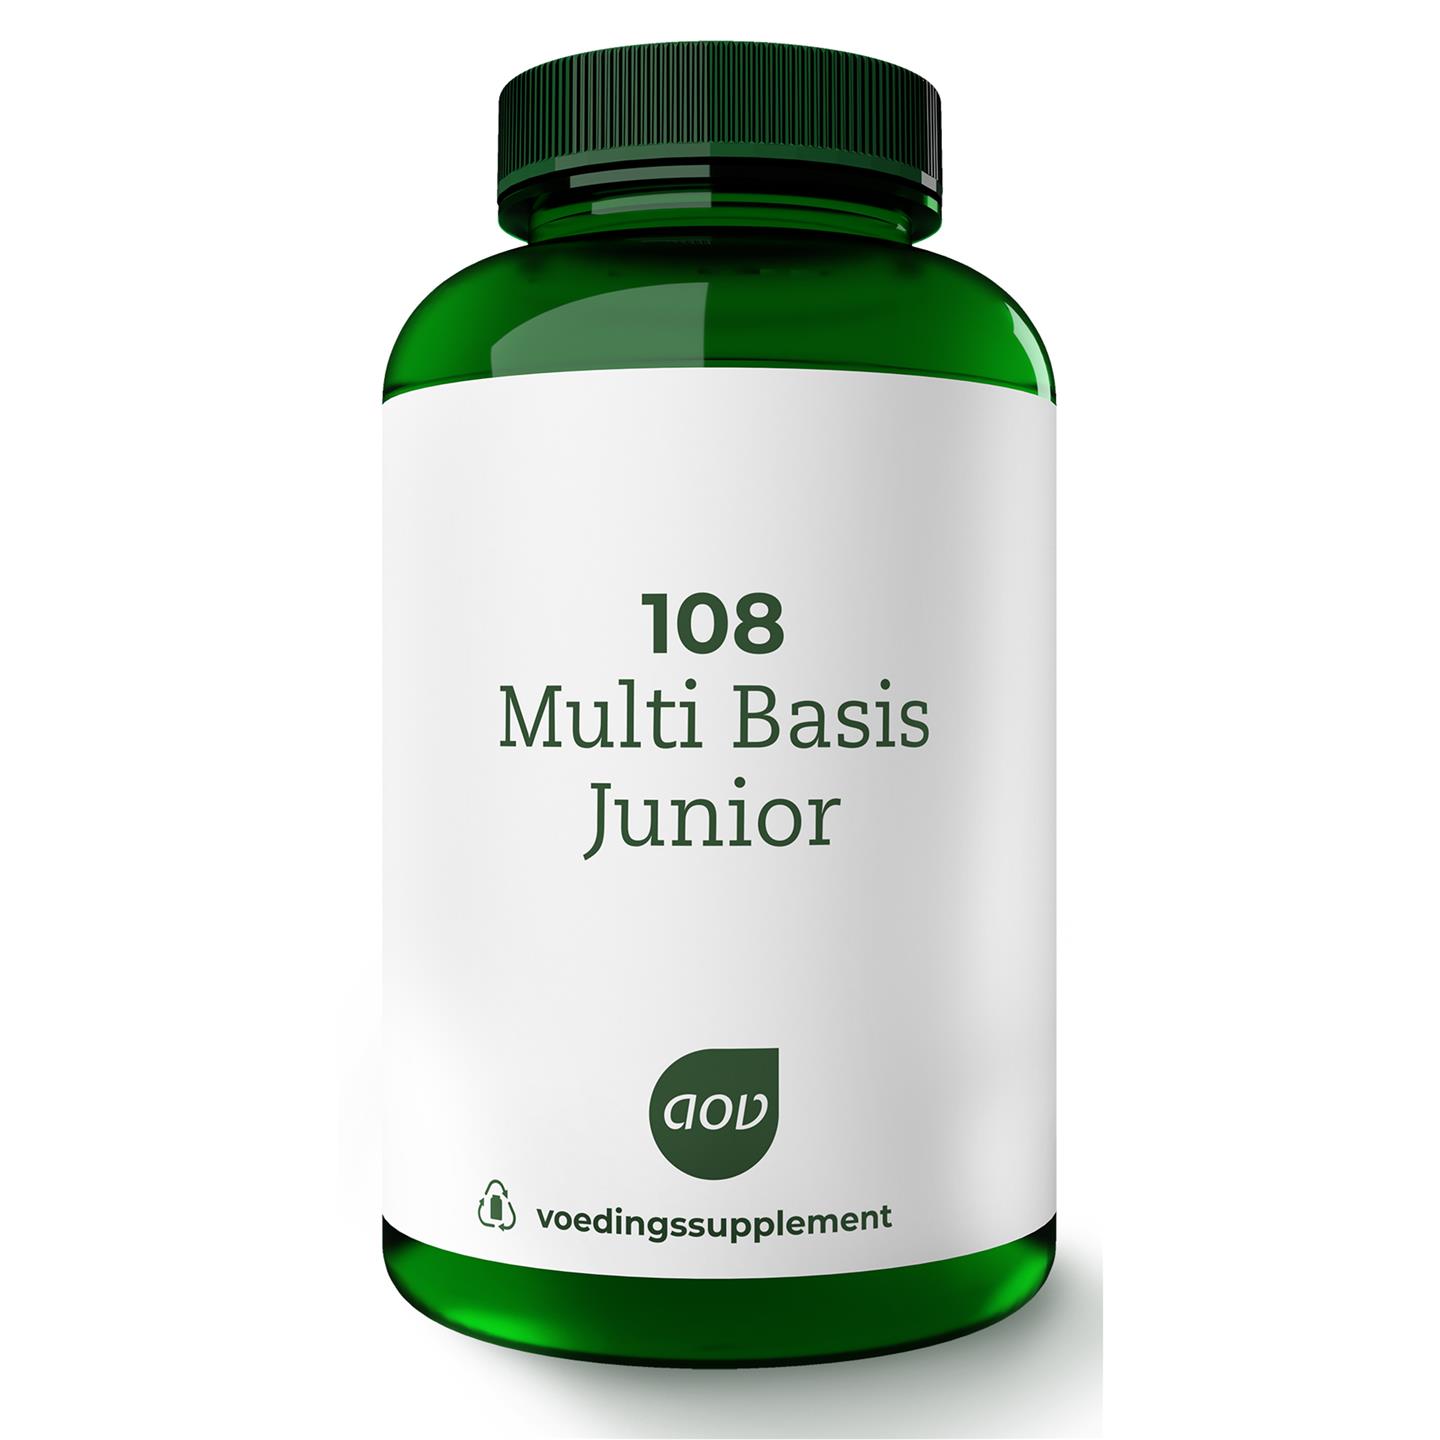 108 Multi Basis Junior